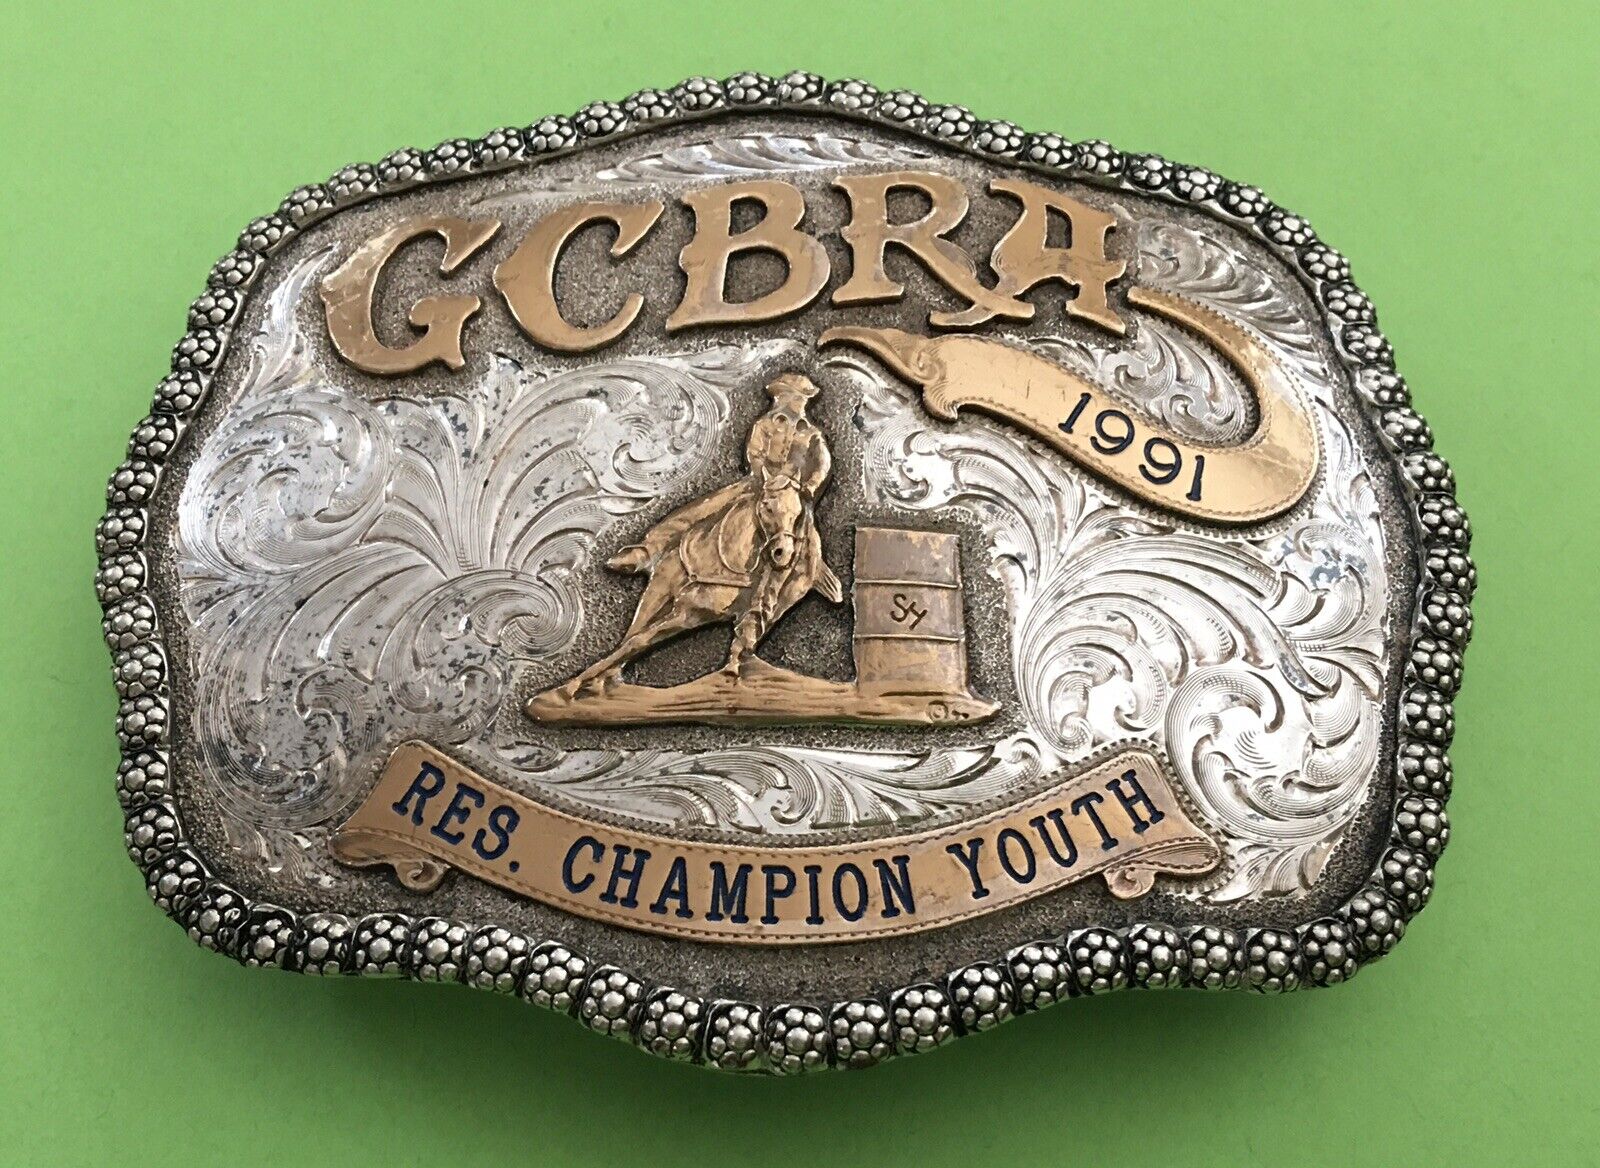 VTG Skyline Sterling Silver 1991 GCBRA Gulf Coast Champion Trophy Belt Buckle